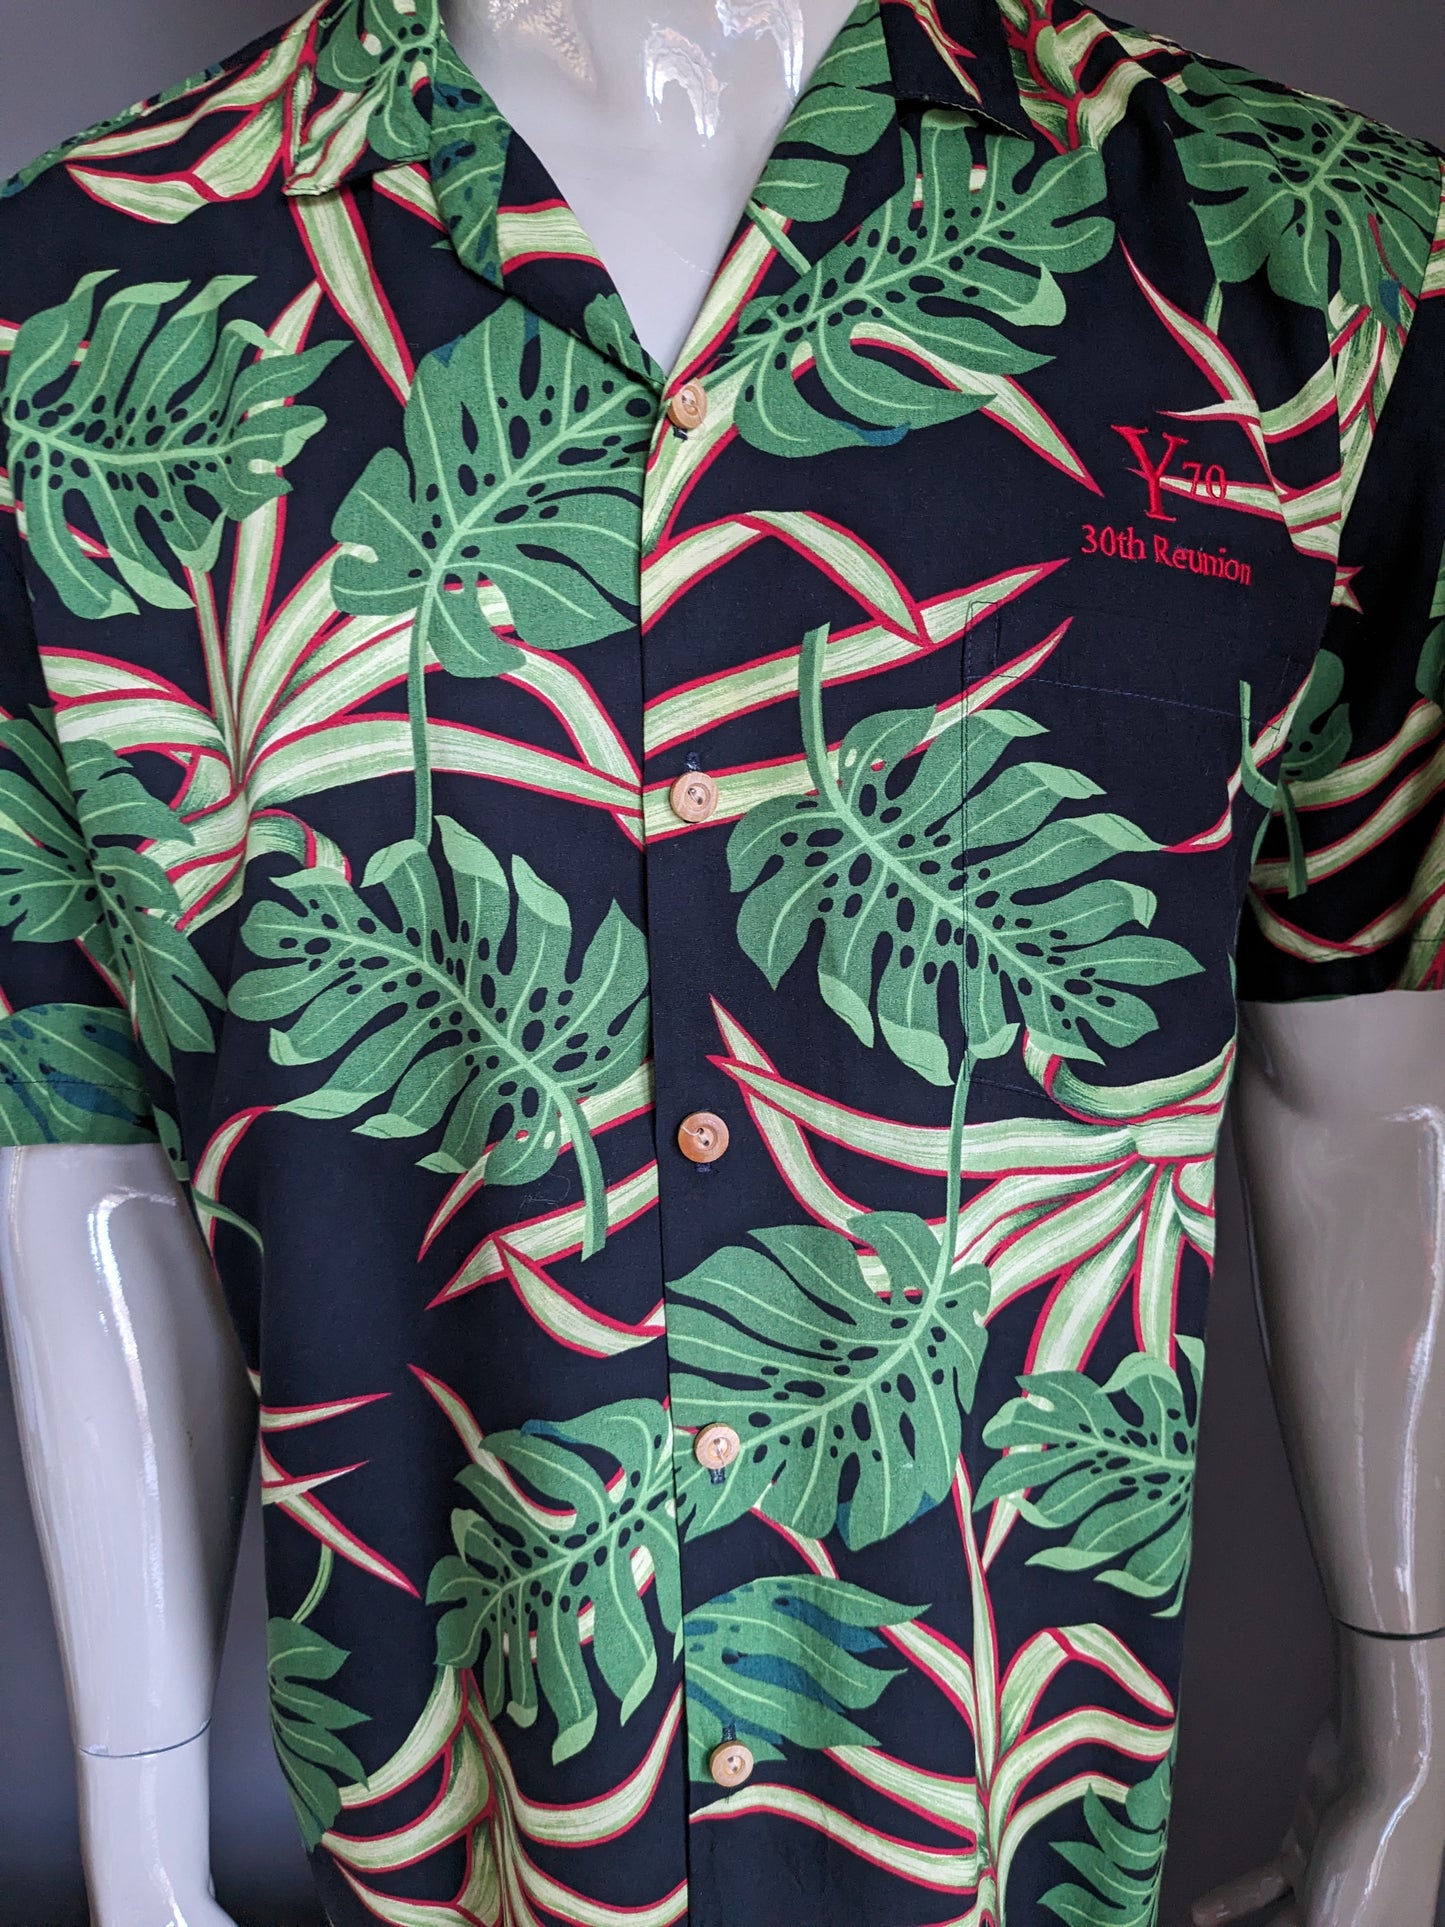 Banana Jack Original Hawaii Shirt Short Sleeve. Impression rouge vert noir. Taille xl. Rayonne / viscose